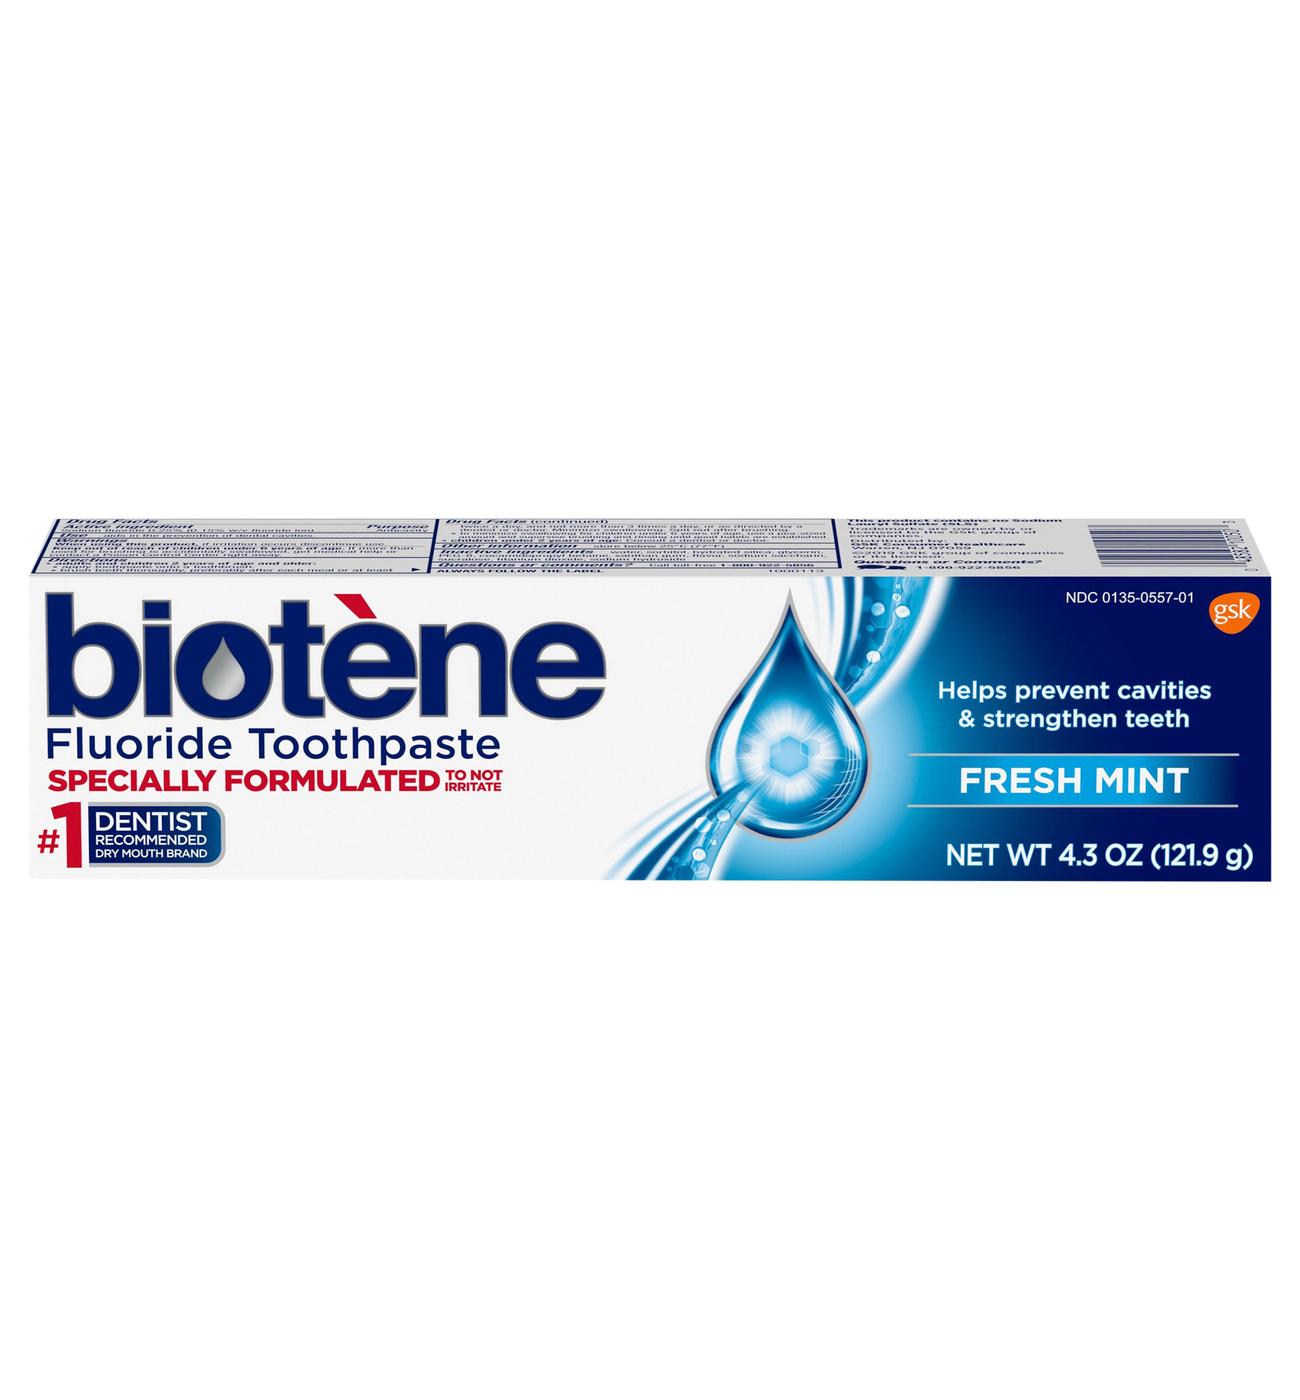 Biotene Fluoride Toothpaste - Fresh Mint; image 1 of 3